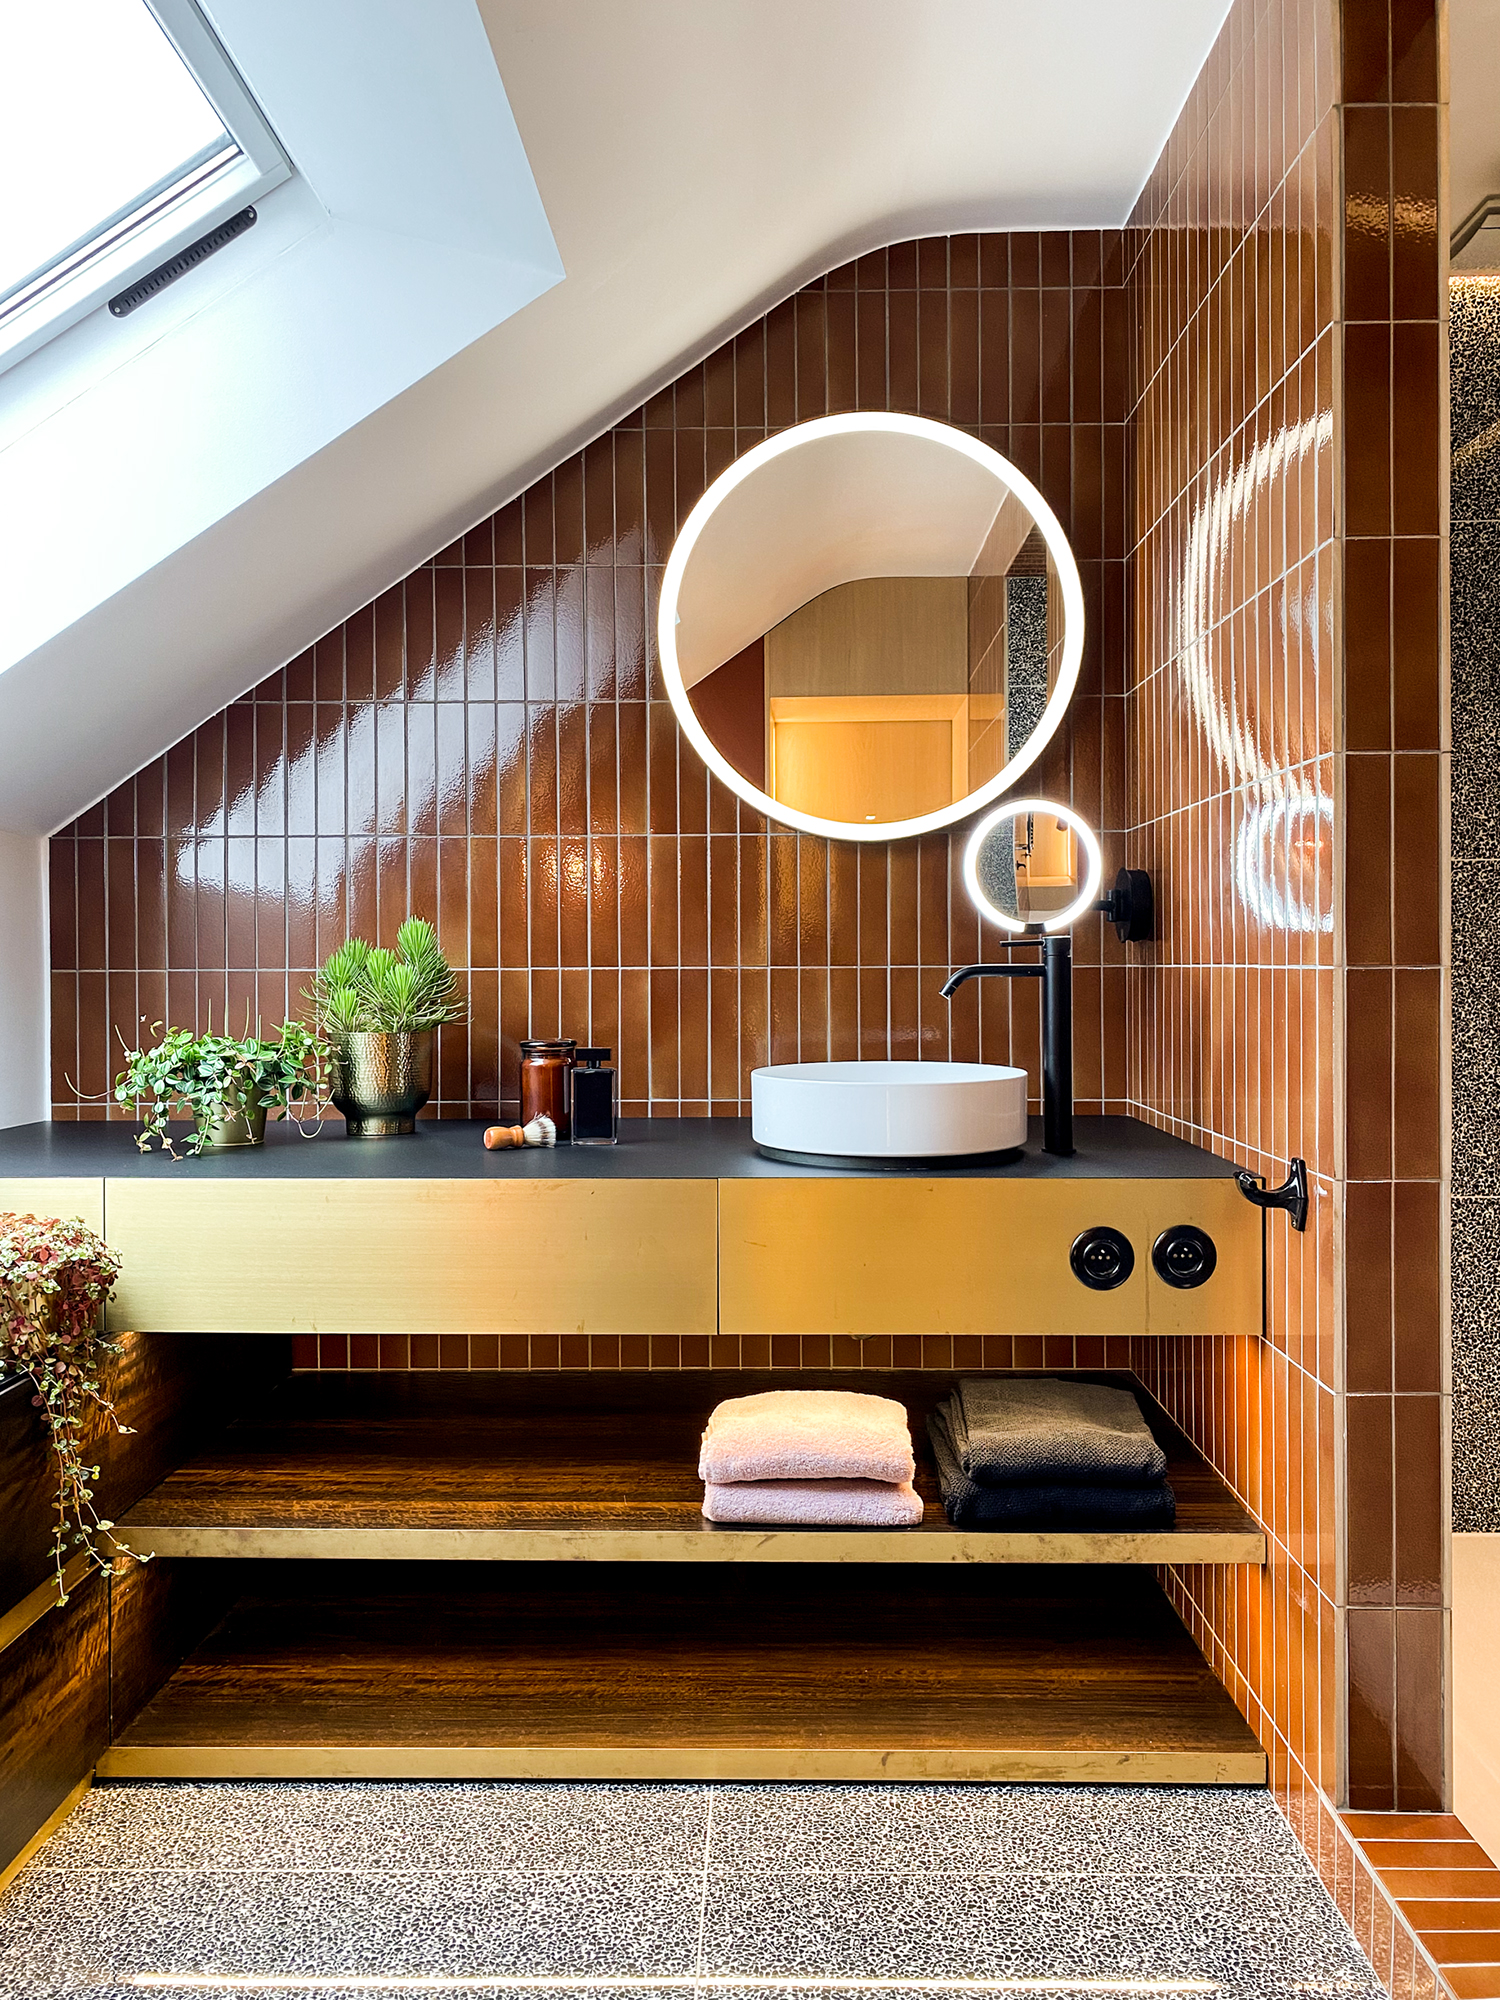 4 New Design Ideas to Rejuvenate Your Home